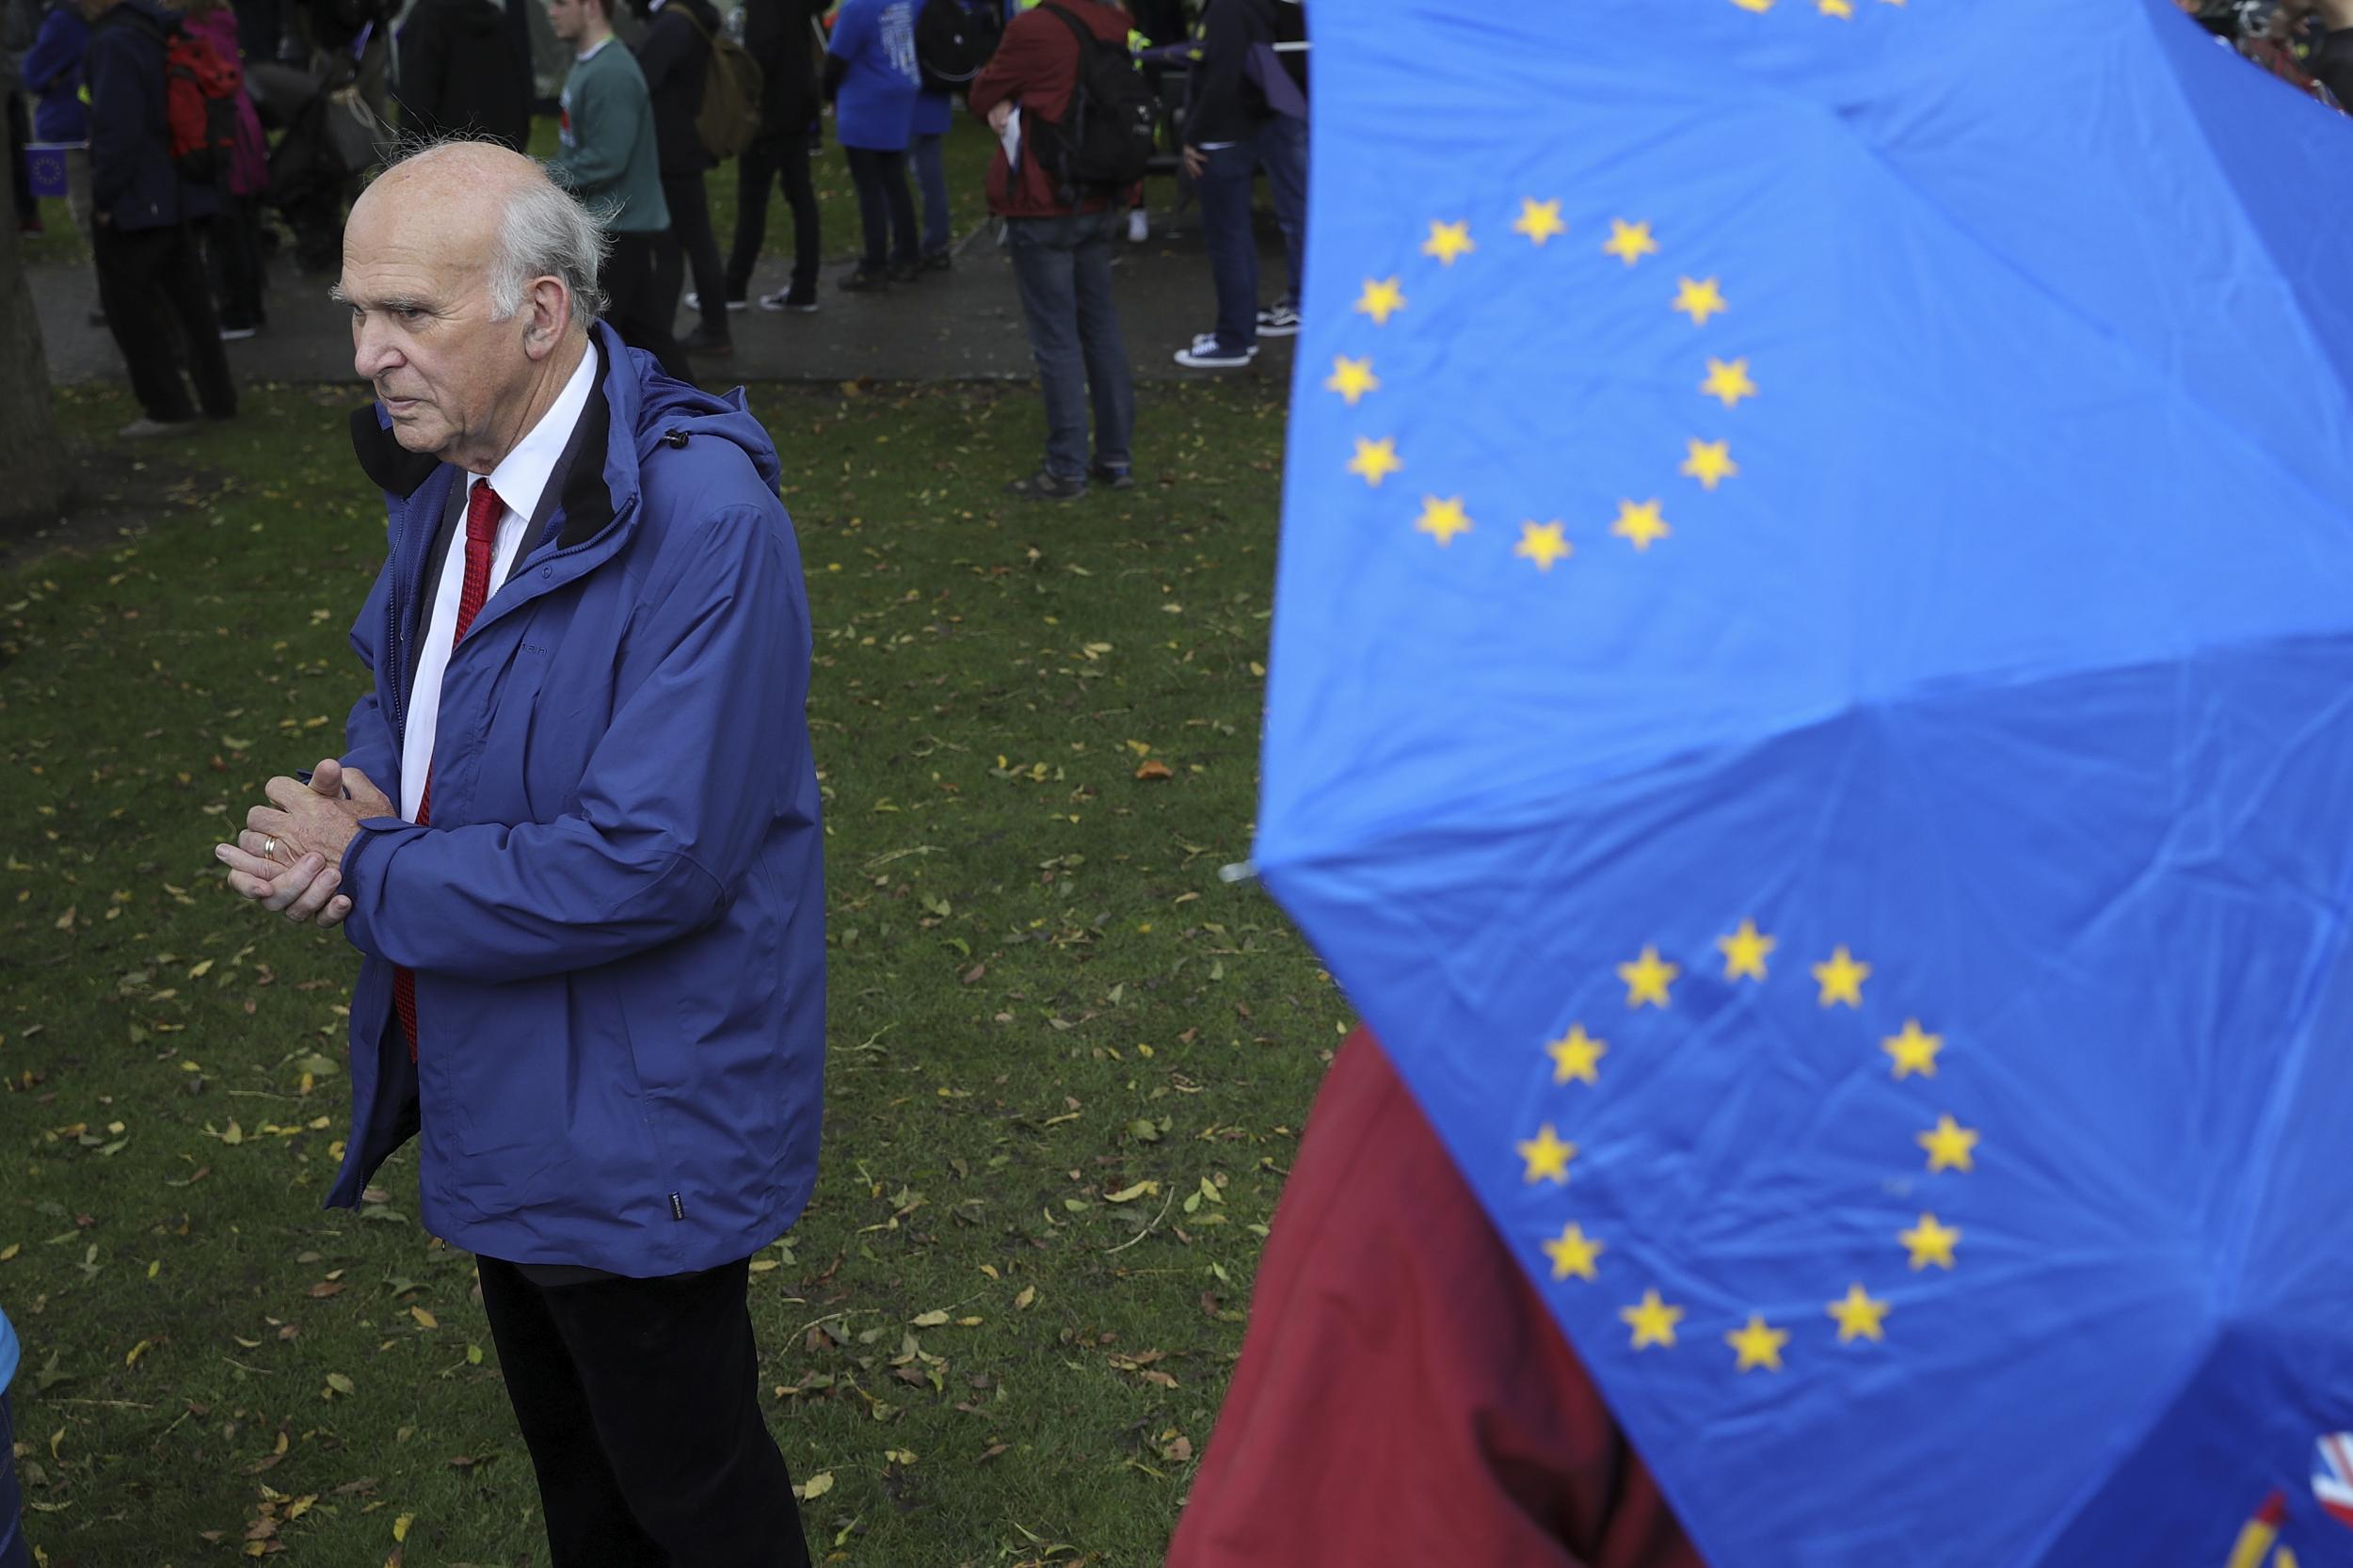 Lib Dem leader Sir Vince Cable attends a pro-EU demonstration